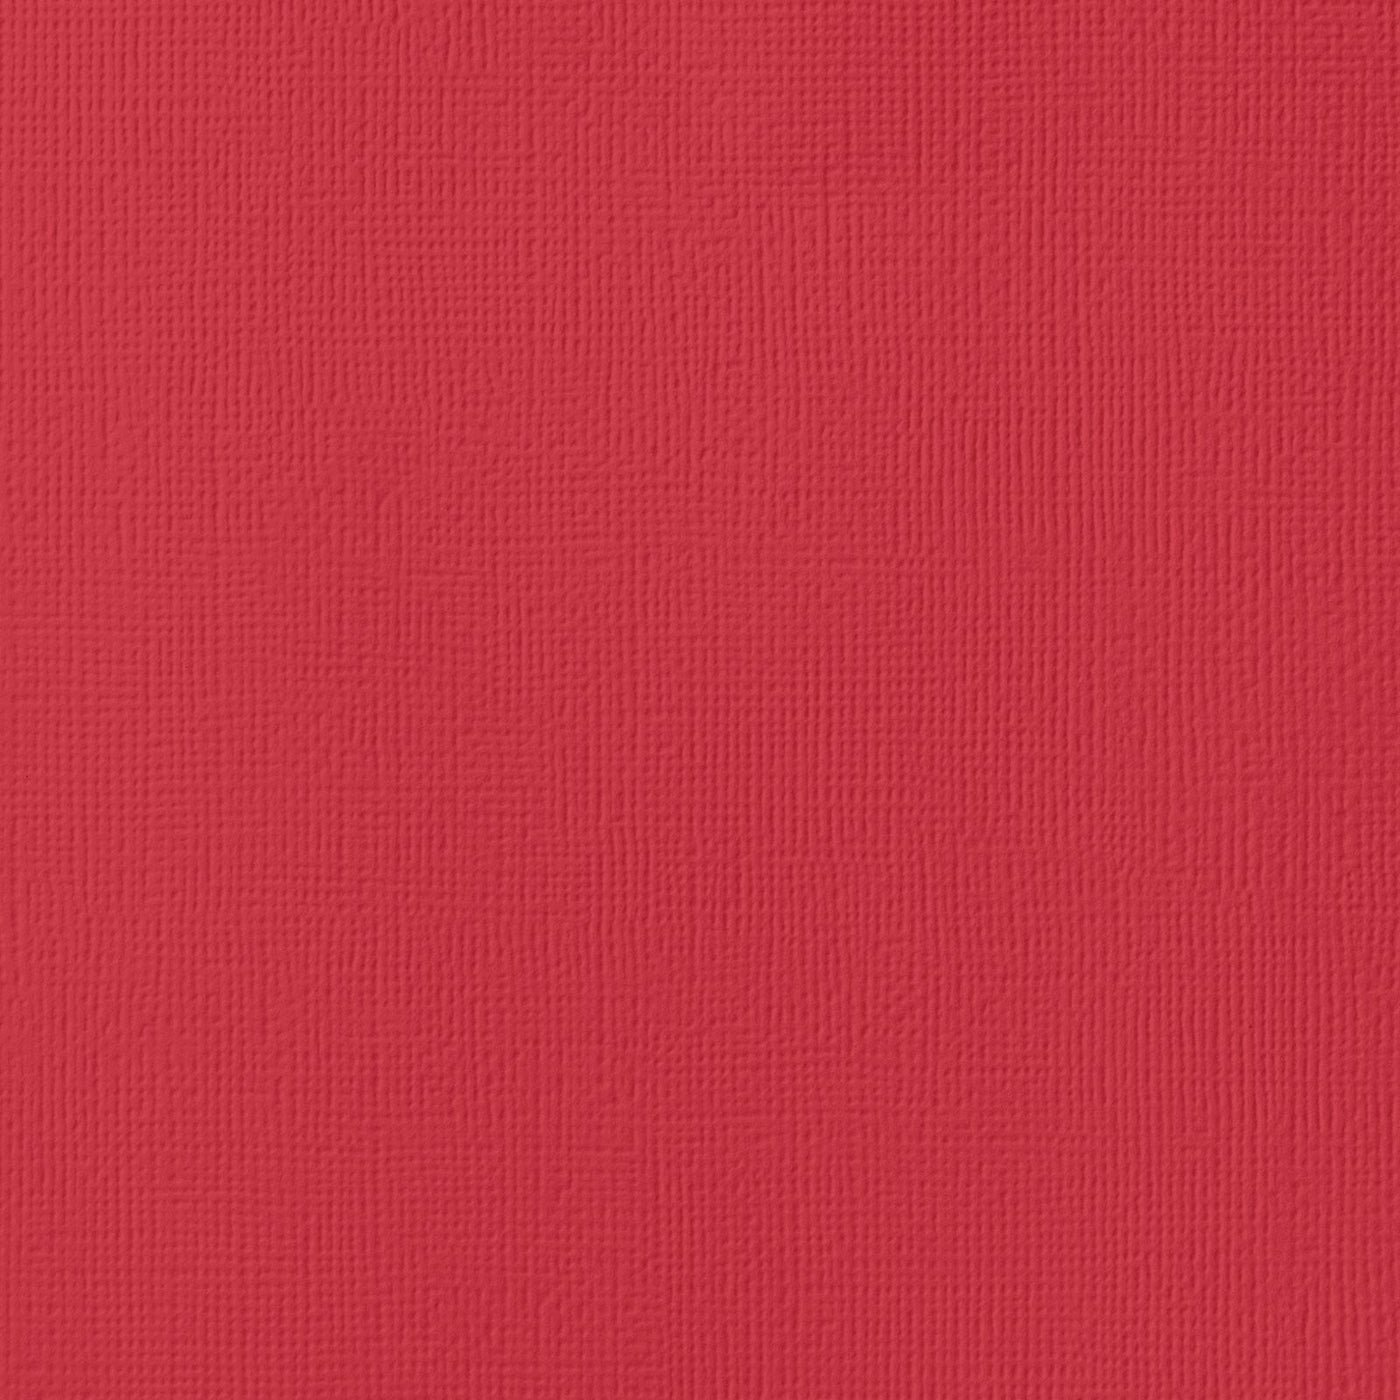 CRIMSON red cardstock -12x12 inch - 80 lb - textured - American Crafts scrapbook paper